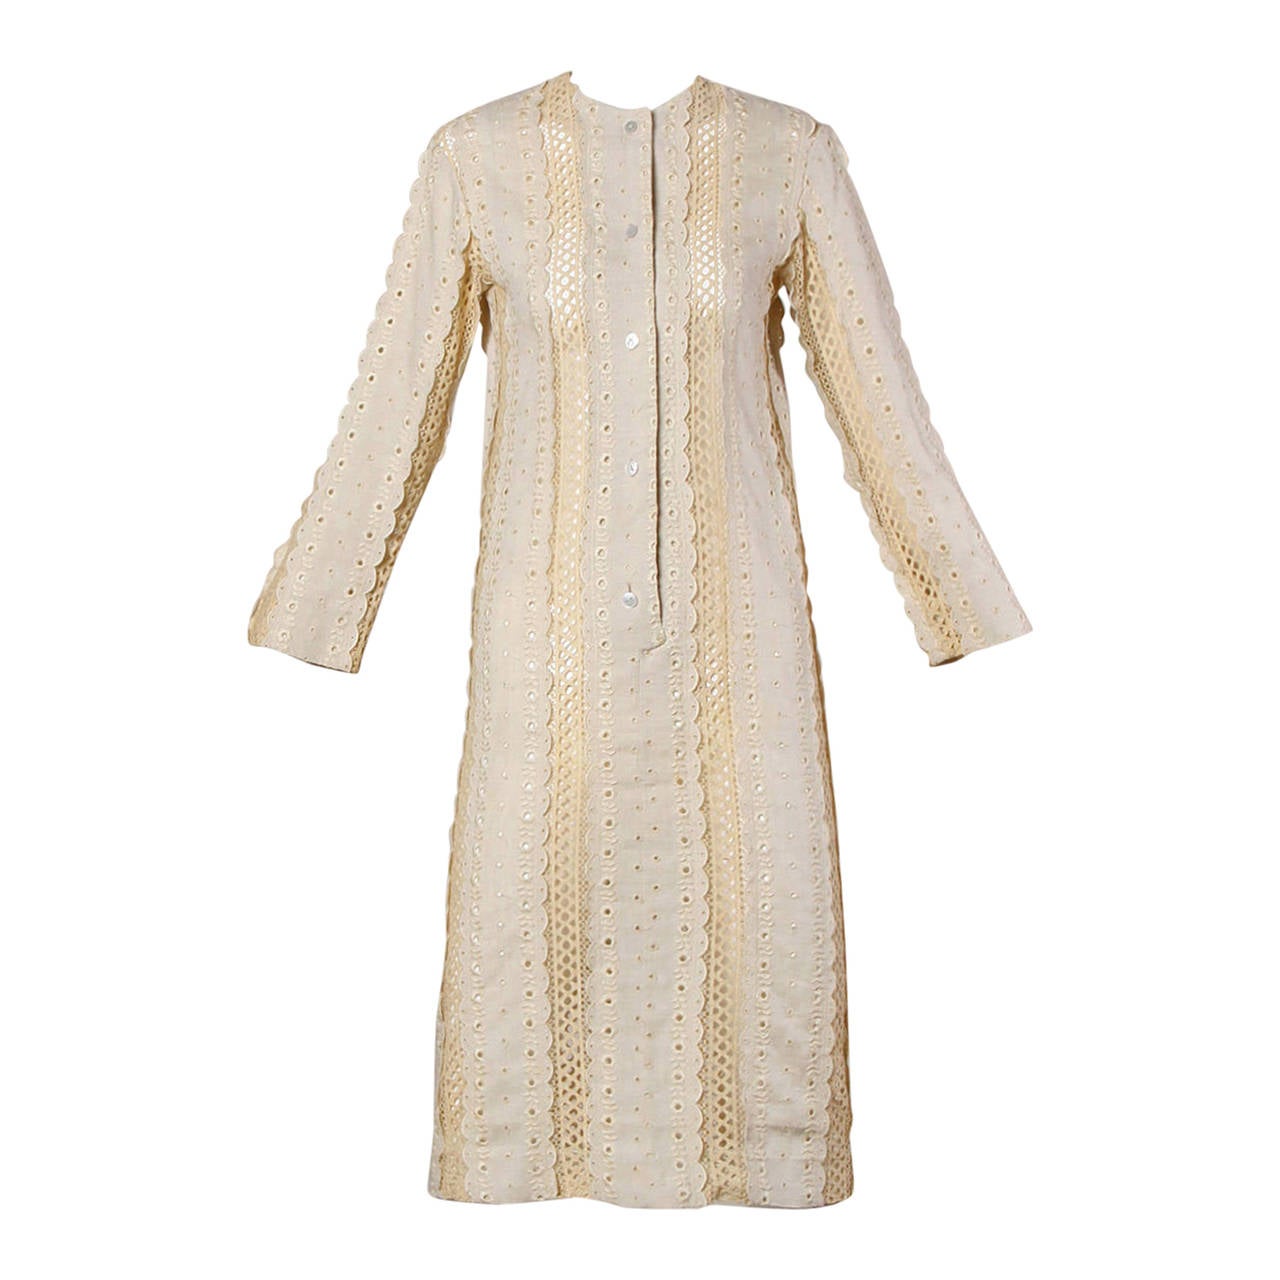 Rudi Gernreich 1960s Vintage Scalloped Lace Linen Dress